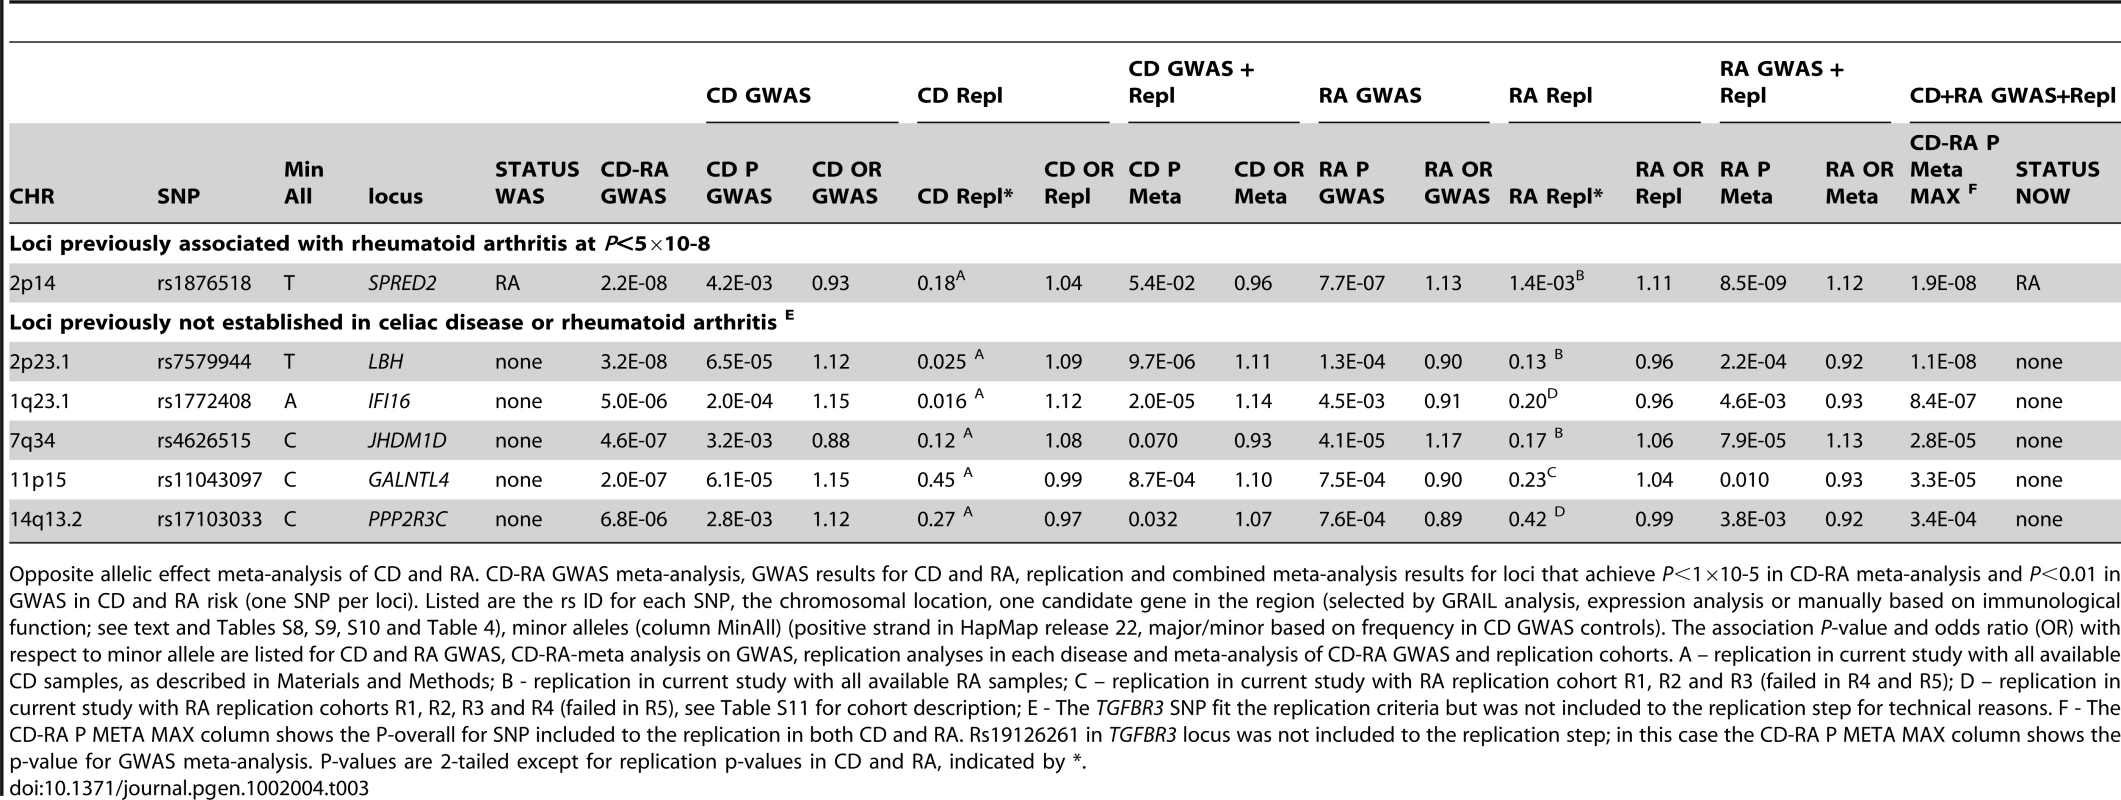 CD-RA meta-analysis GWAS and replication—opposite allelic effect method.